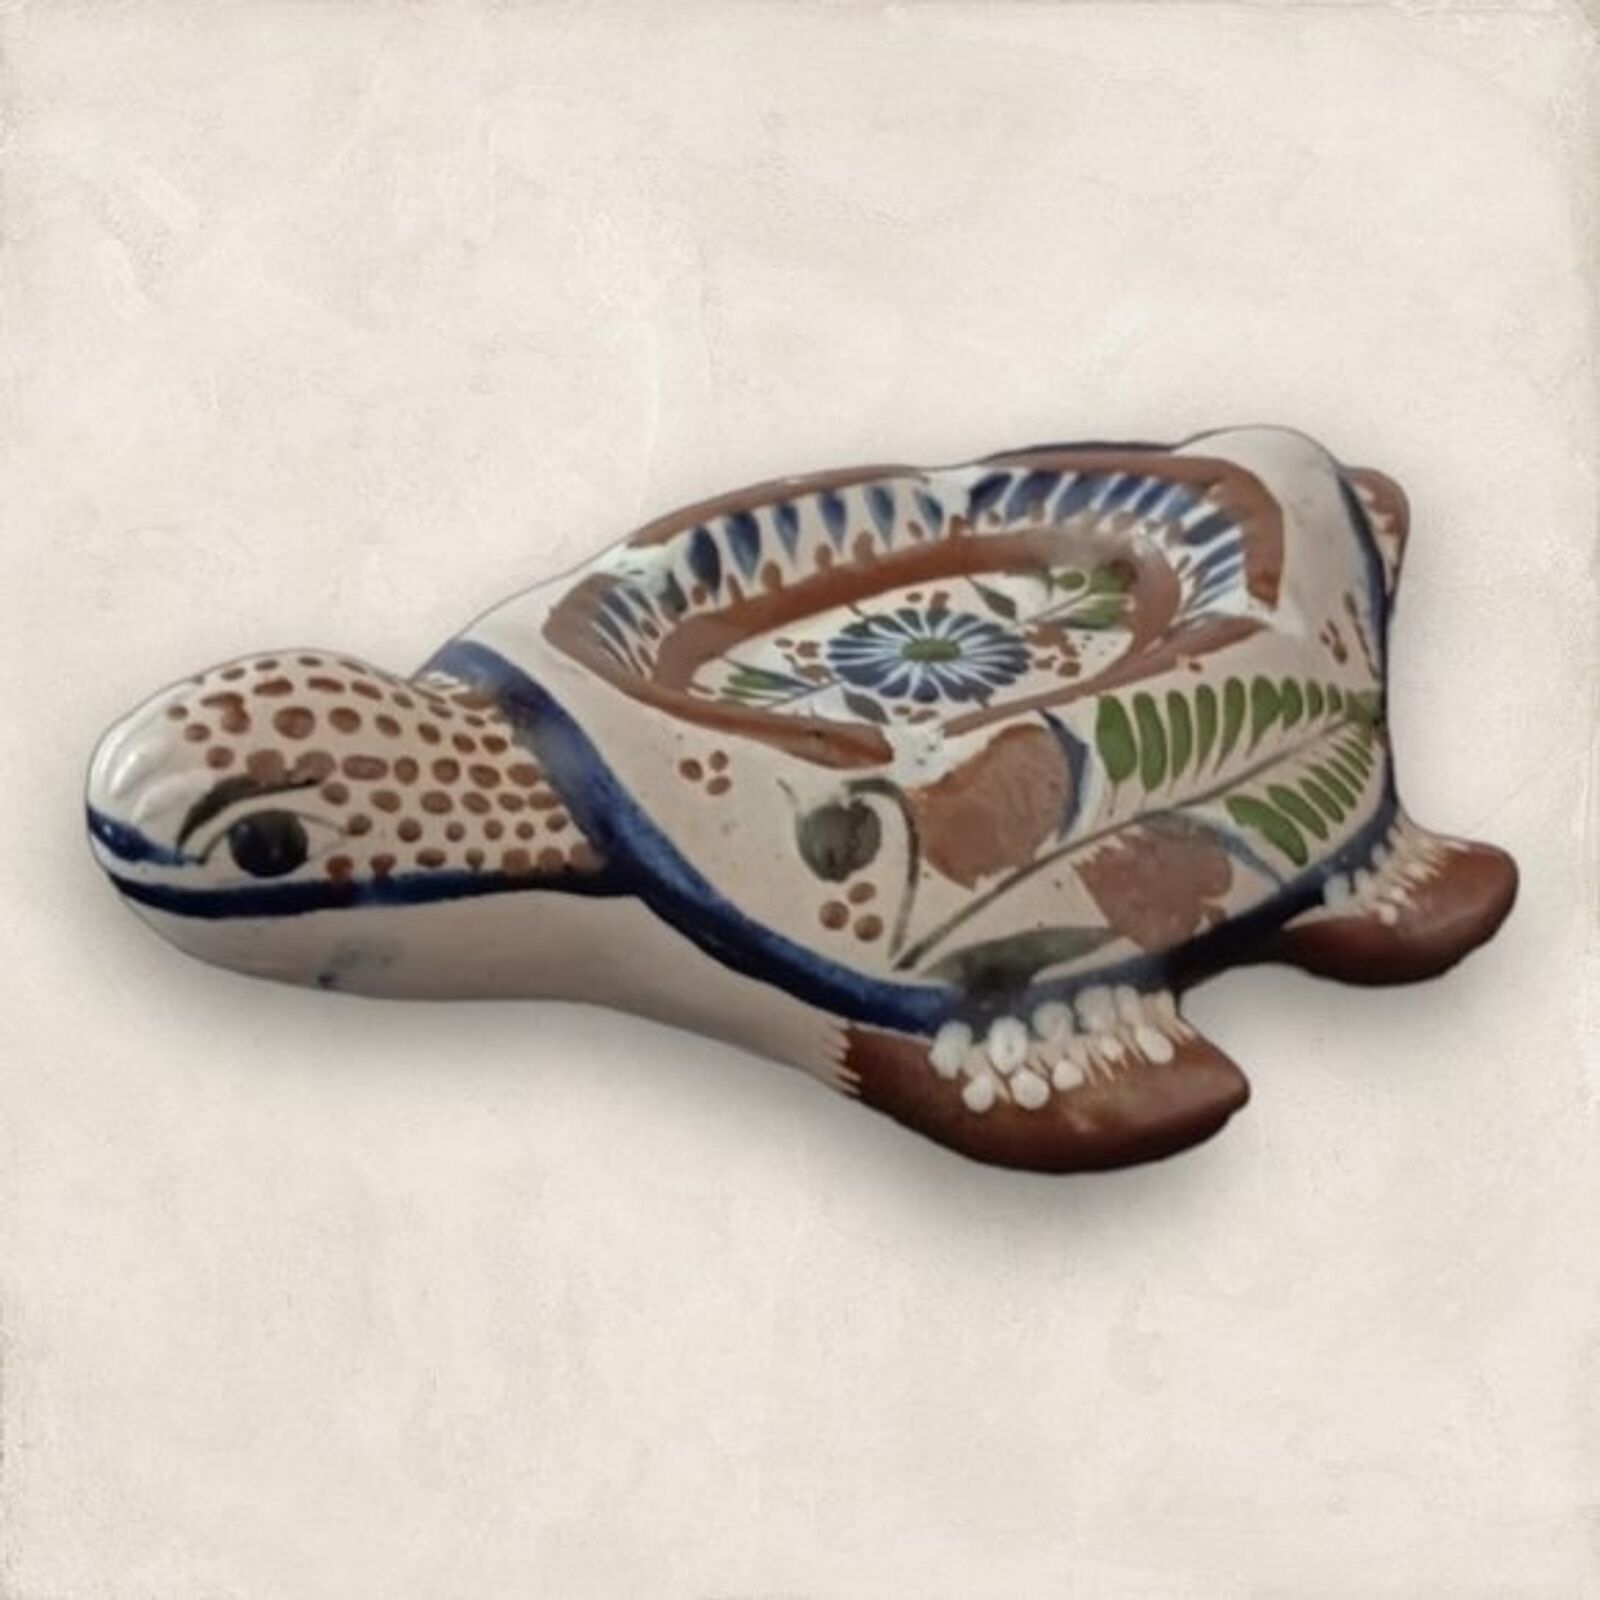 Vintage Tonala Mexican Pottery Sea Turtle Ashtray Hand Made in Mexico Trinket